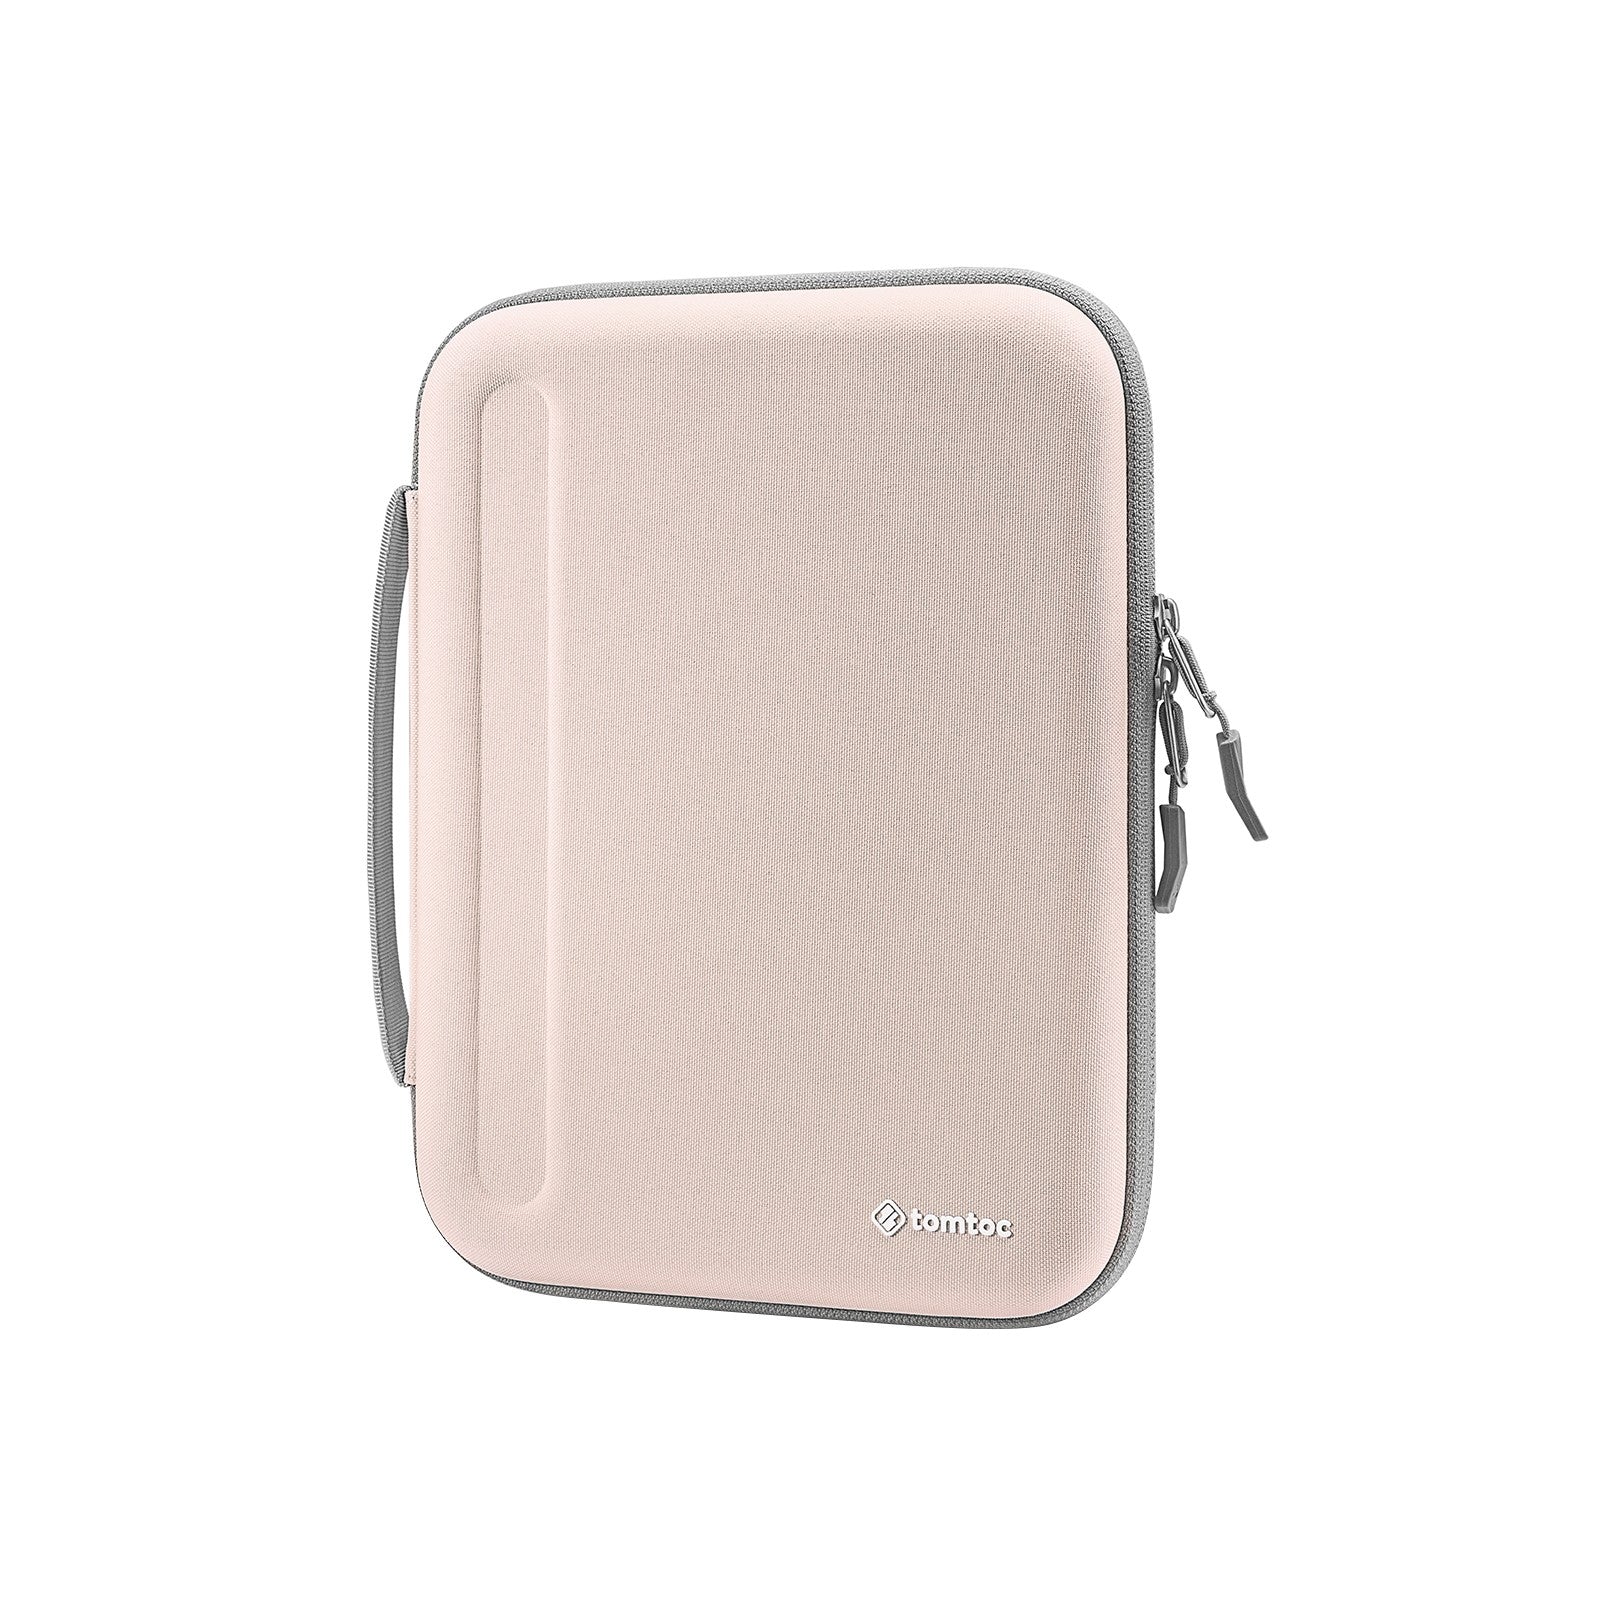 FancyCase-B06 Portfolio iPad Case for iPad Air/Pro | Sakura